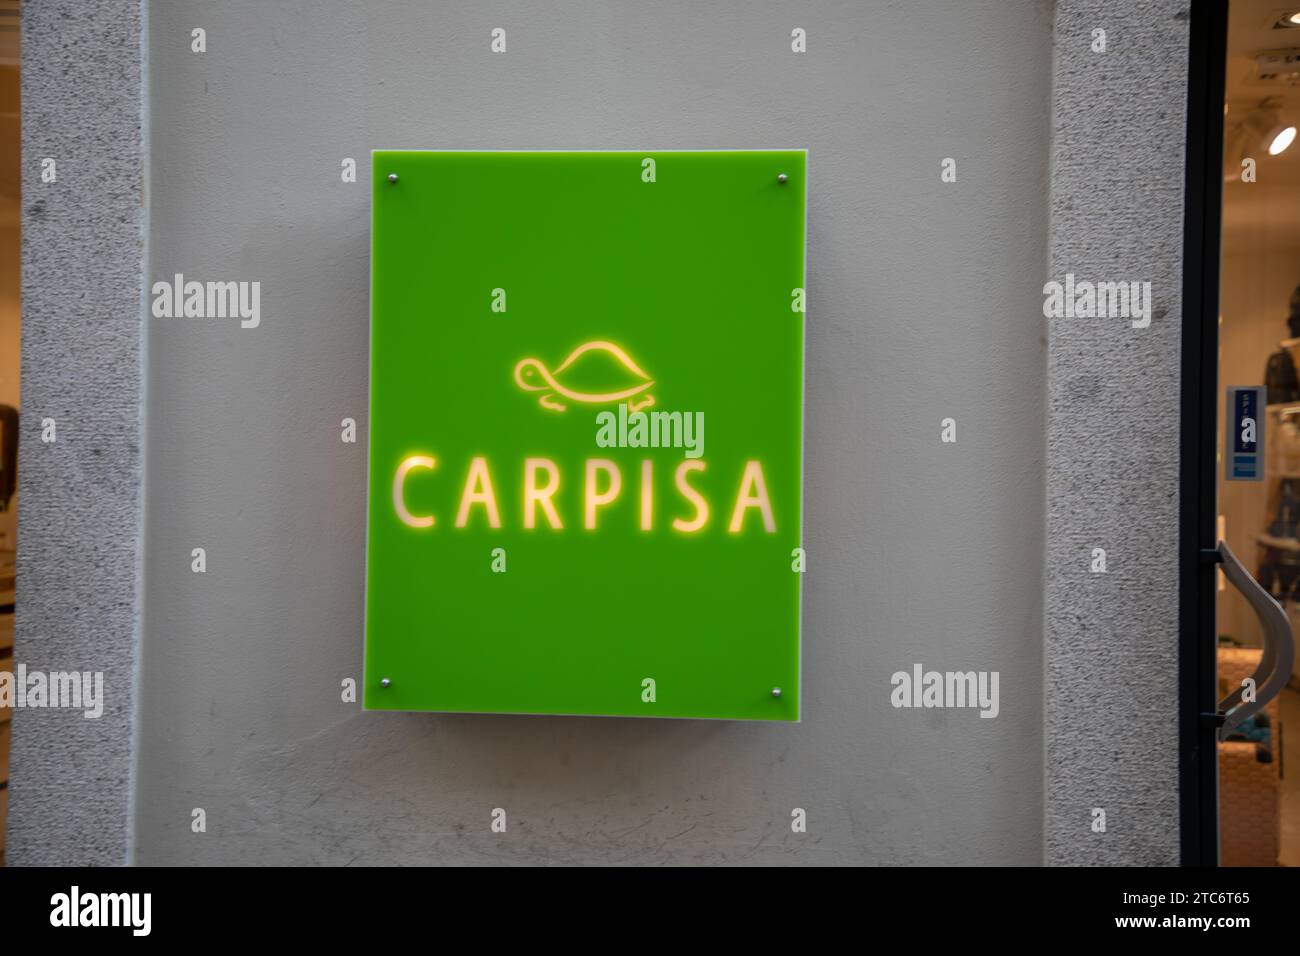 Carpisa logo hi-res stock photography and images - Alamy